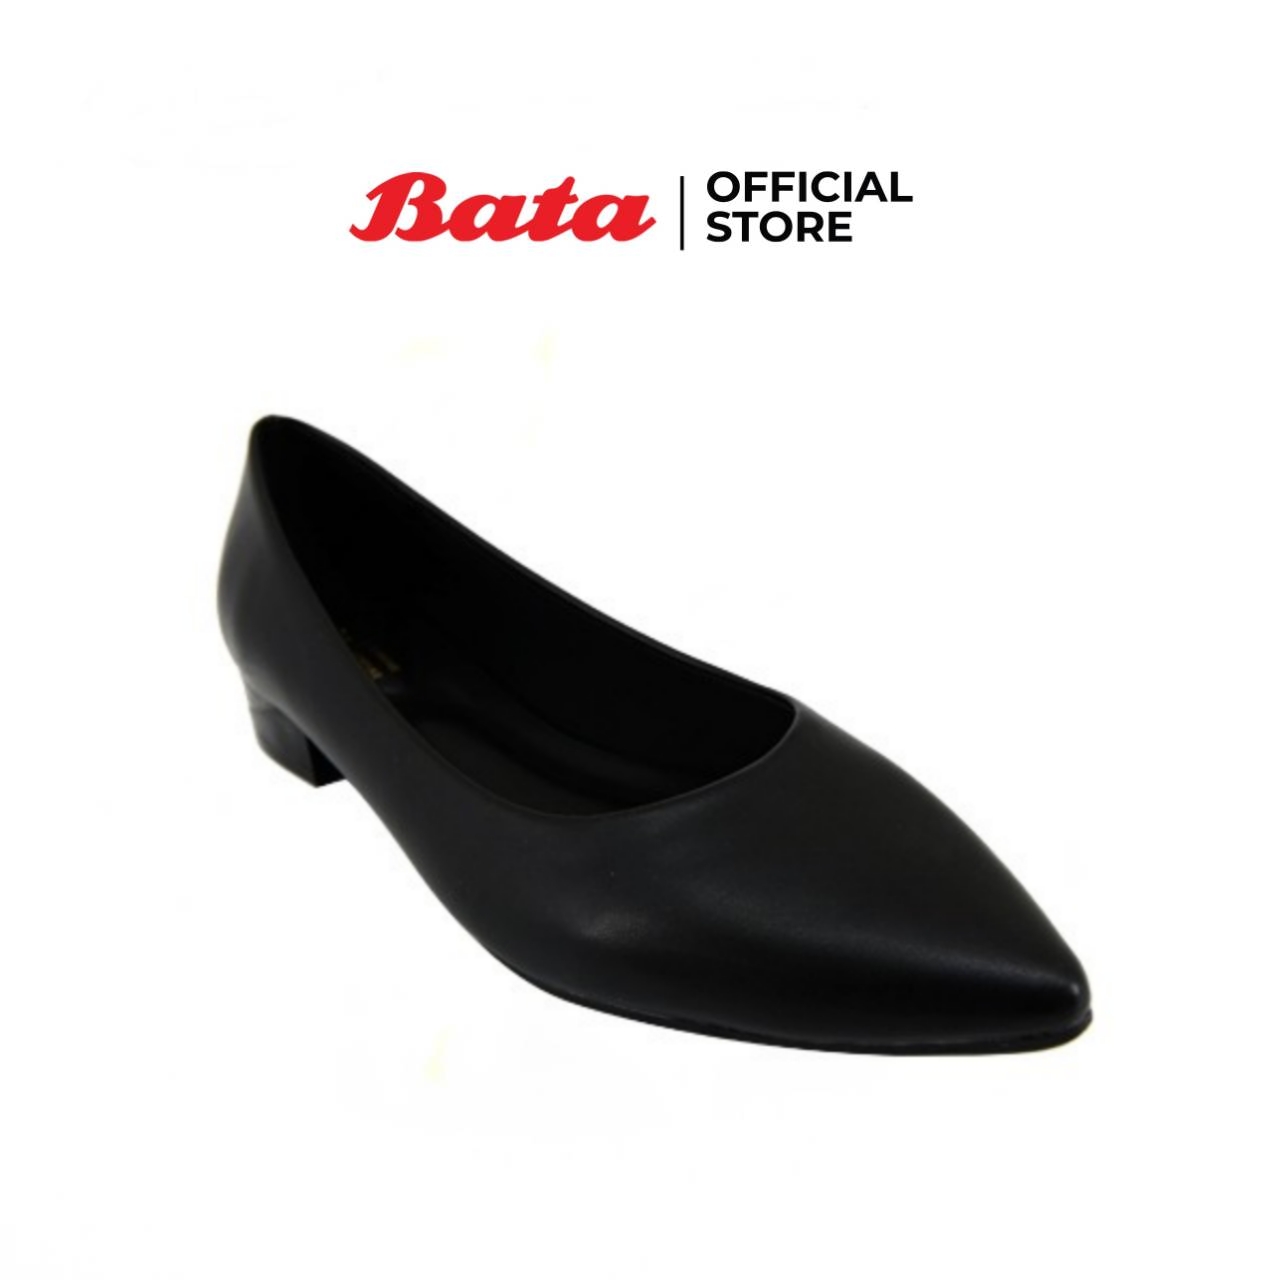 Bata LADIES CASUAL BLOCK HEEL รองเท้าลำลองแฟชั่นหญิง แบบสวม ปิดส้น สีดำ รหัส 6516326 / สีเบจ รหัส 6515326 Ladiesflat Fashion